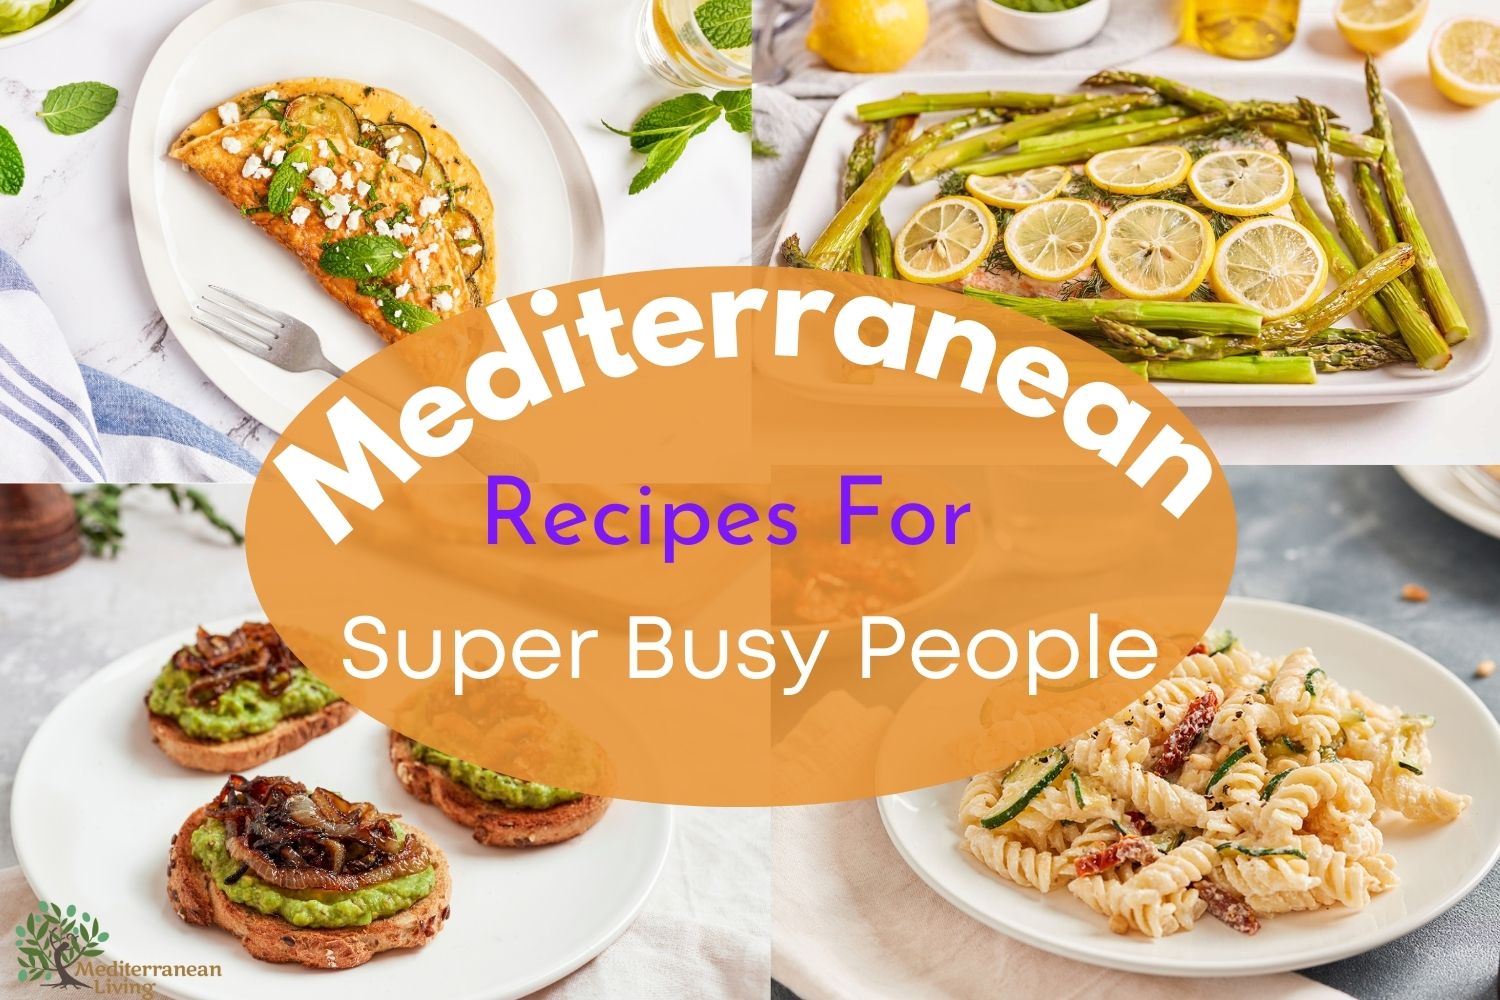 Mediterranean Diet for Super Busy People